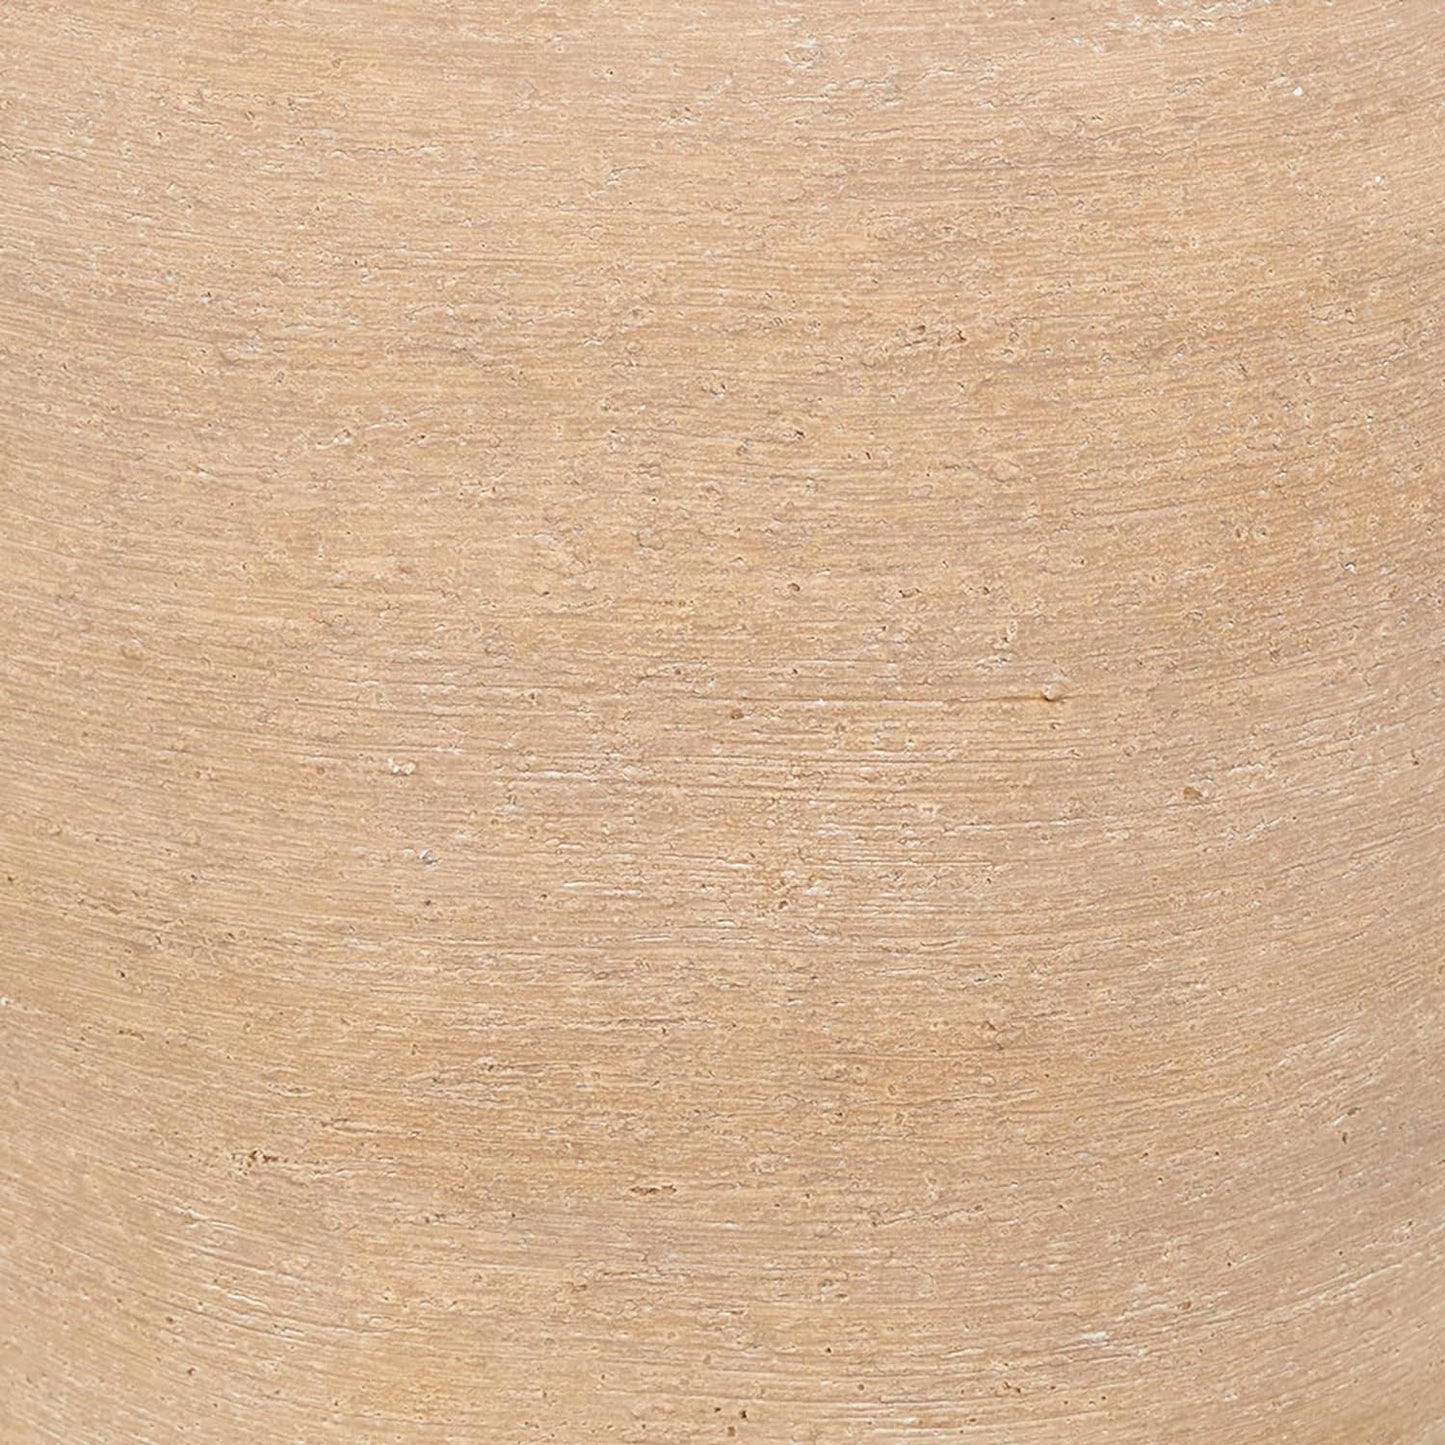 Deco 79 Ceramic Wide Textured Vase, 14" x 13" x 17", Beige